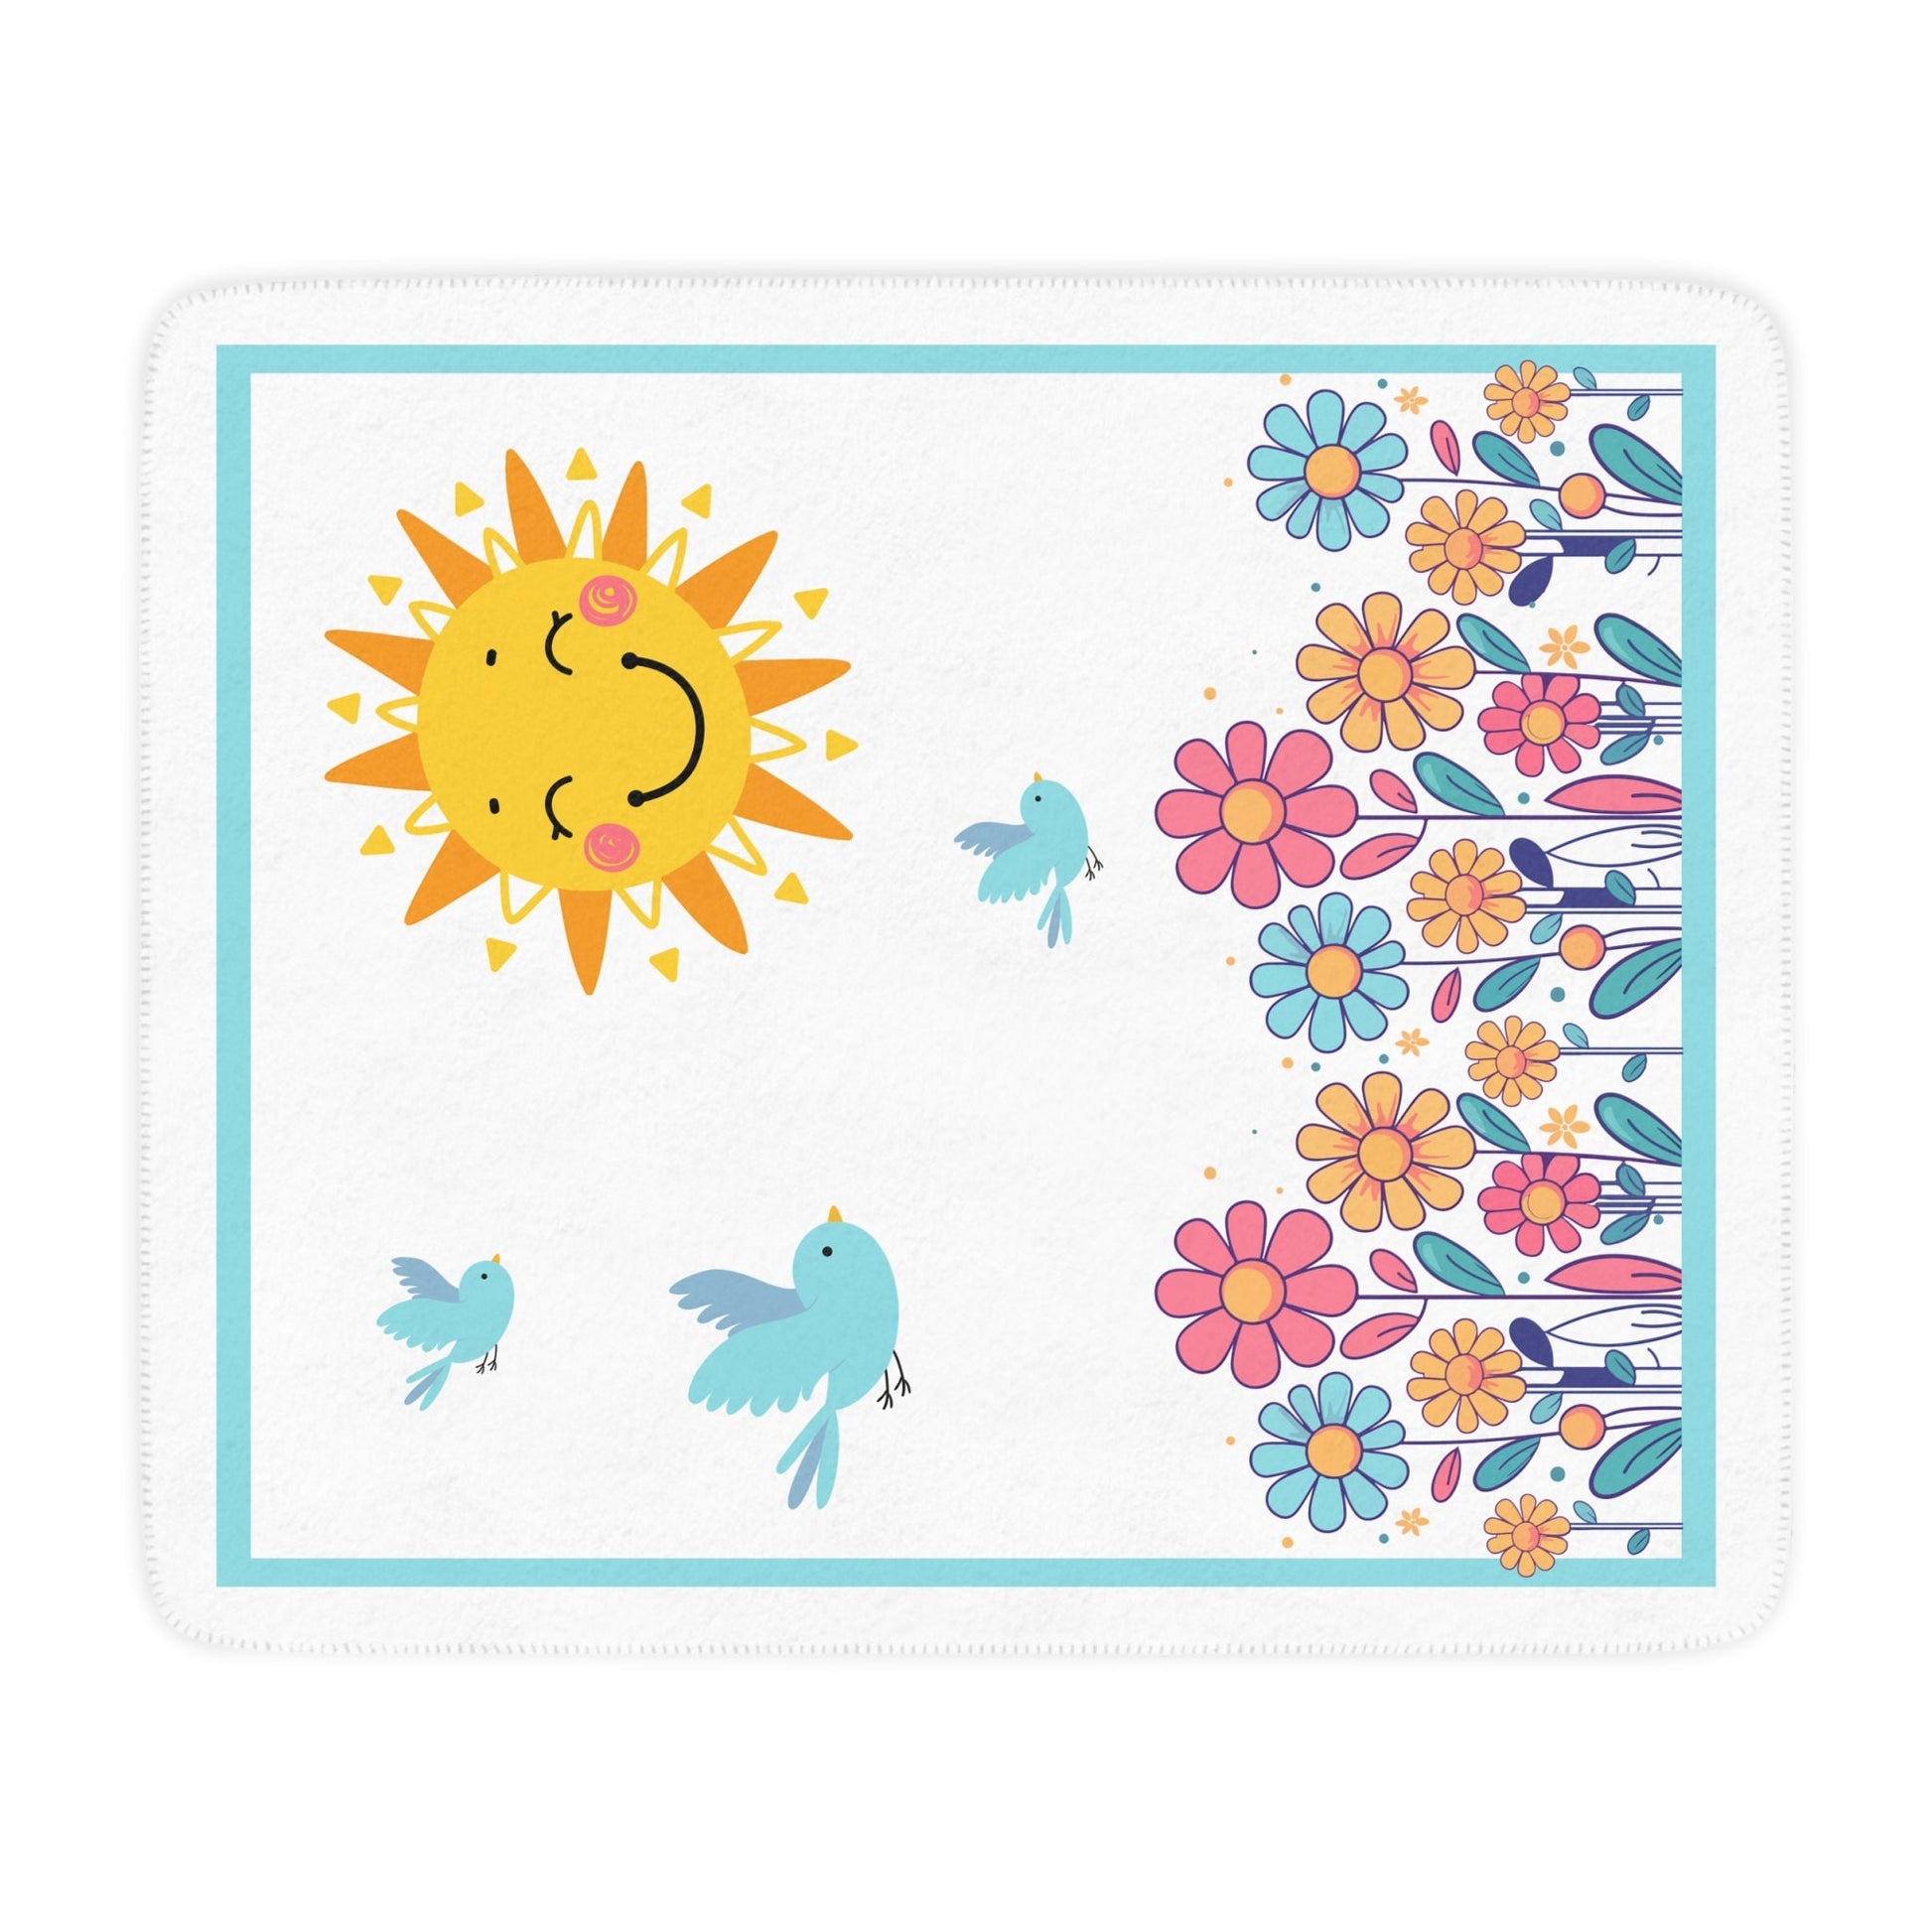 Groovy Happy Flower Throw Blanket With Sun and Cheery Birds, Hippy Happy Girl Vibe - FlooredByArt